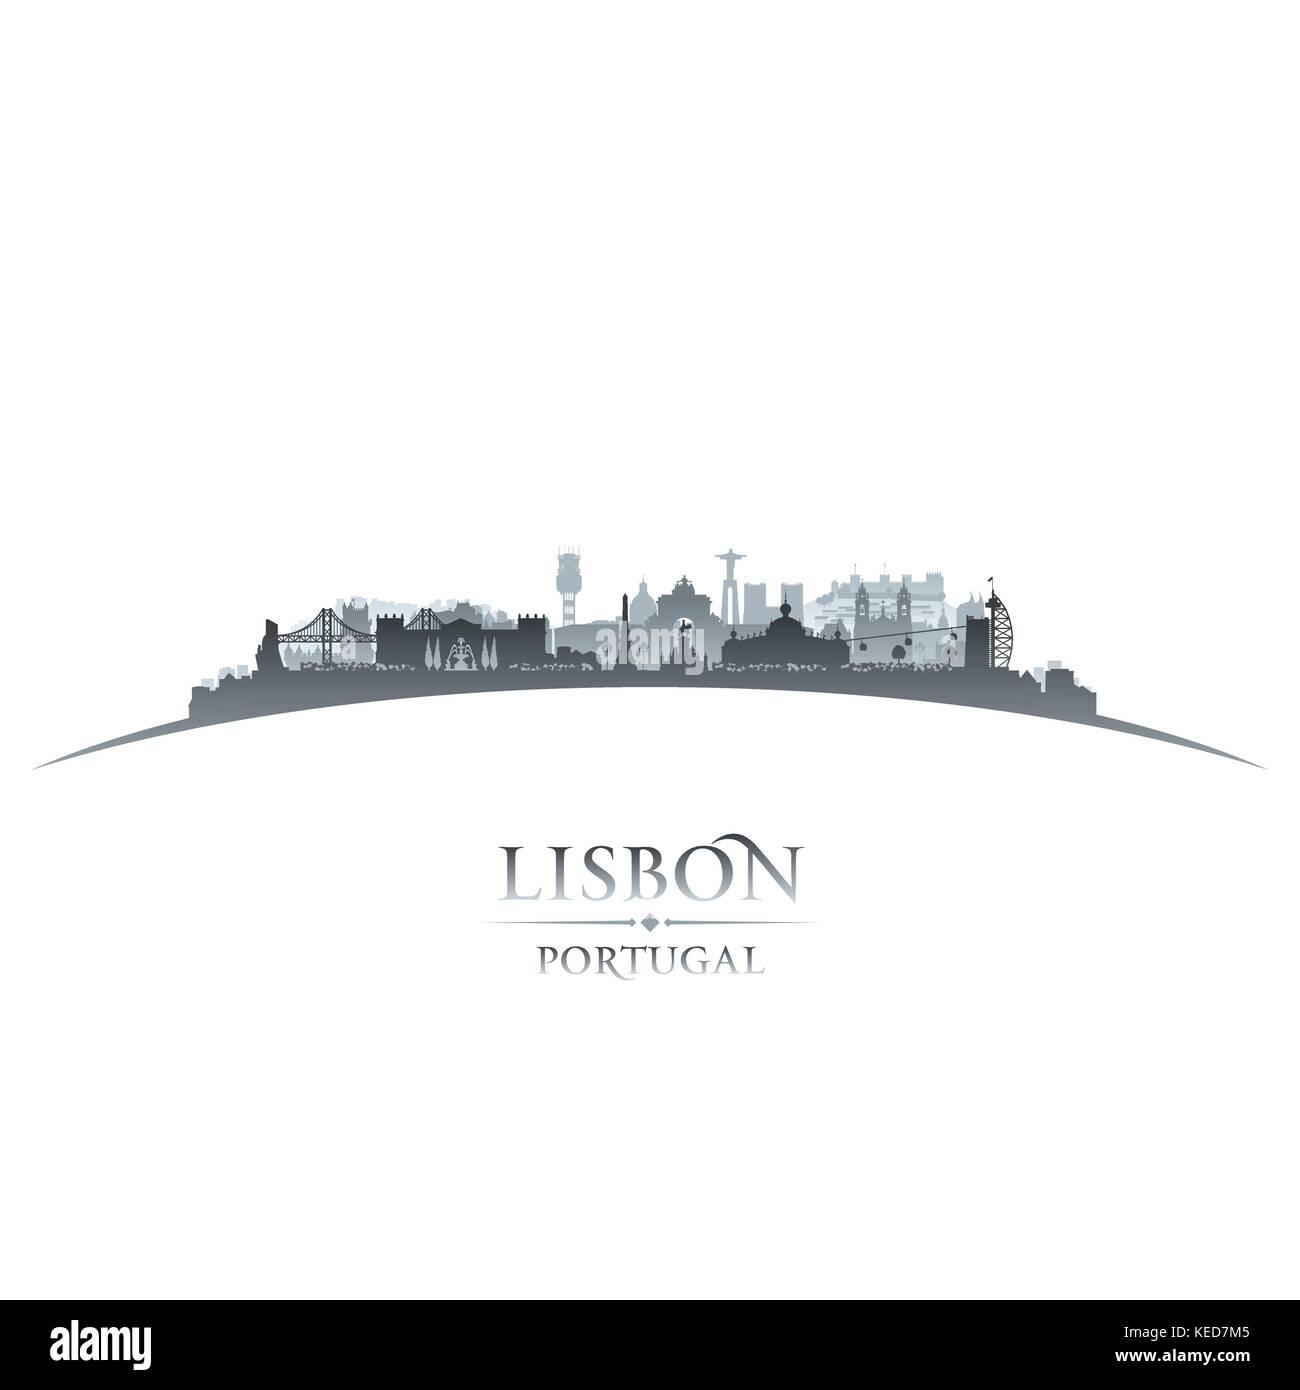 Lisbon Portugal city skyline silhouette. Vector illustration Stock Vector